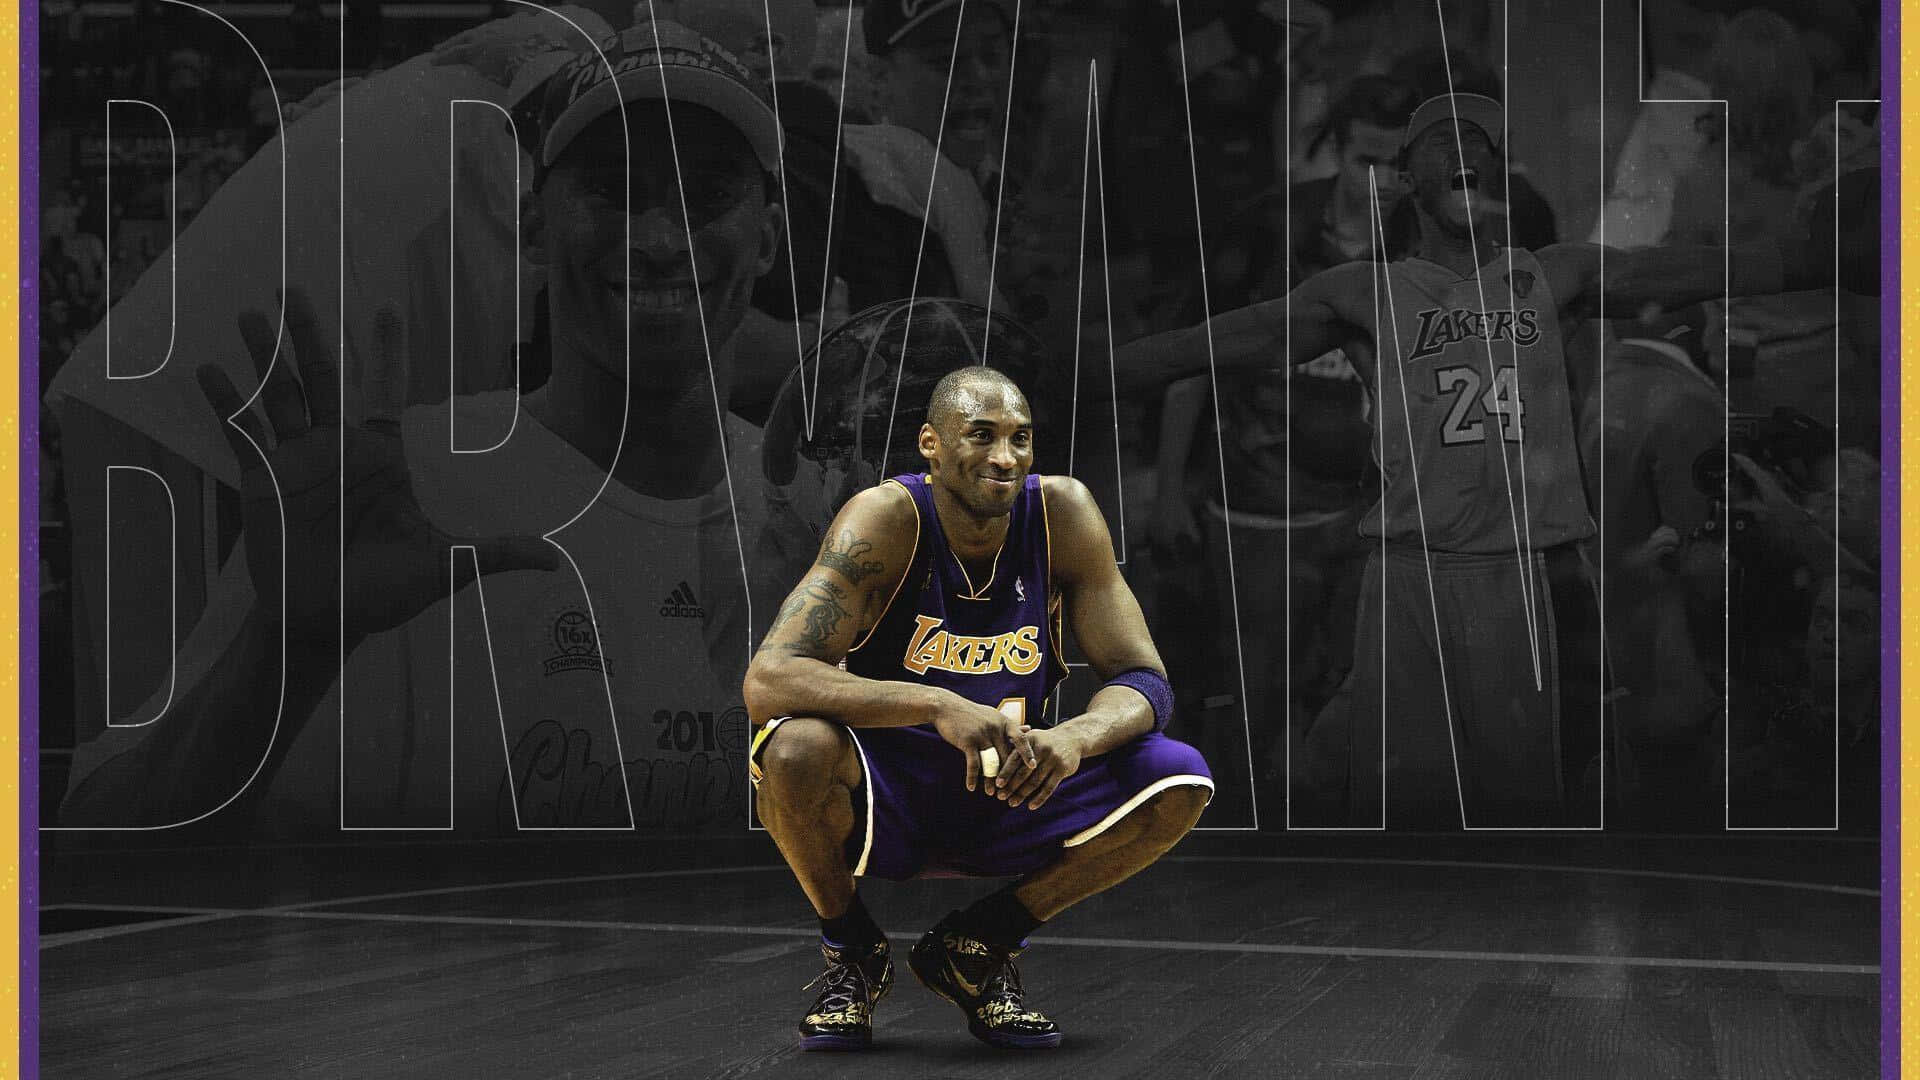 Kobe Bryant, the legendary basketball player